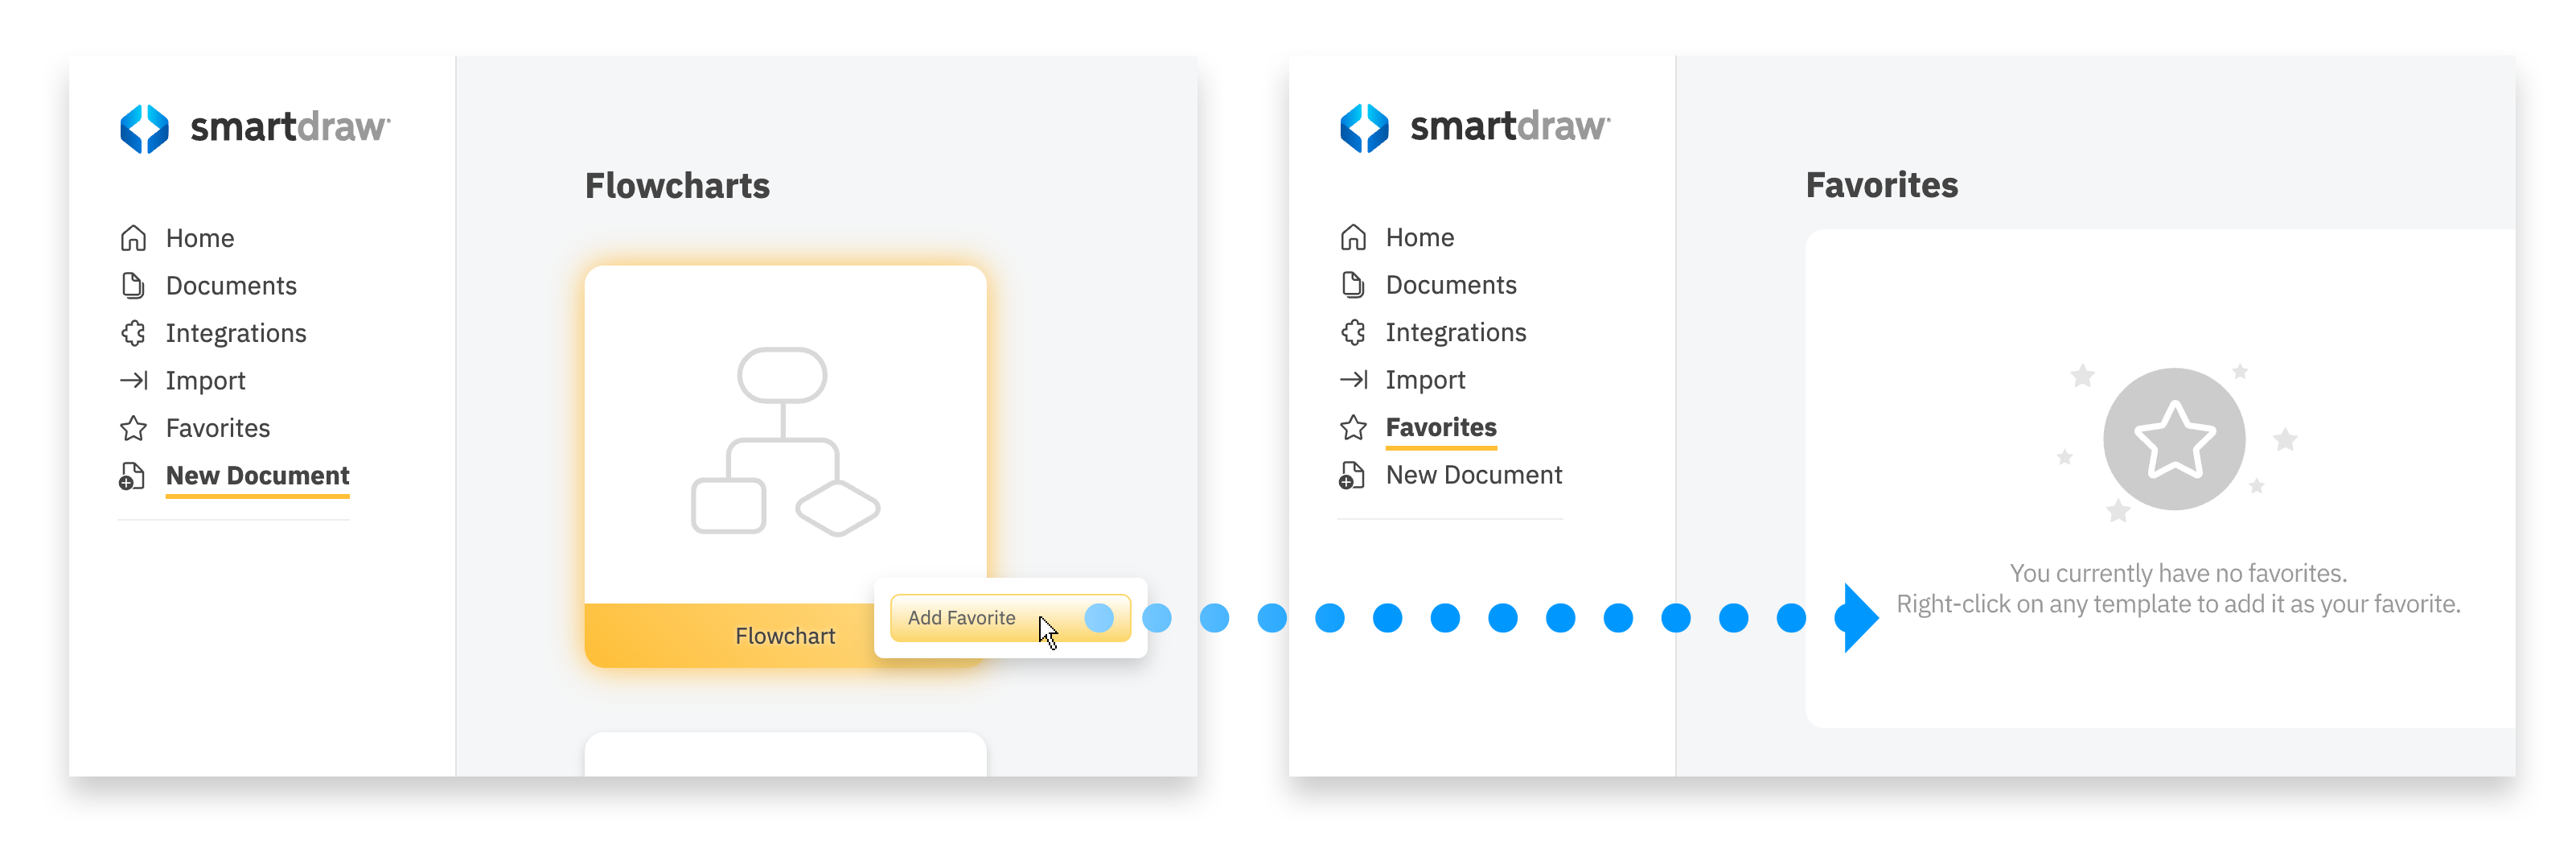 SmartDraw Dashboard Favorite Templates